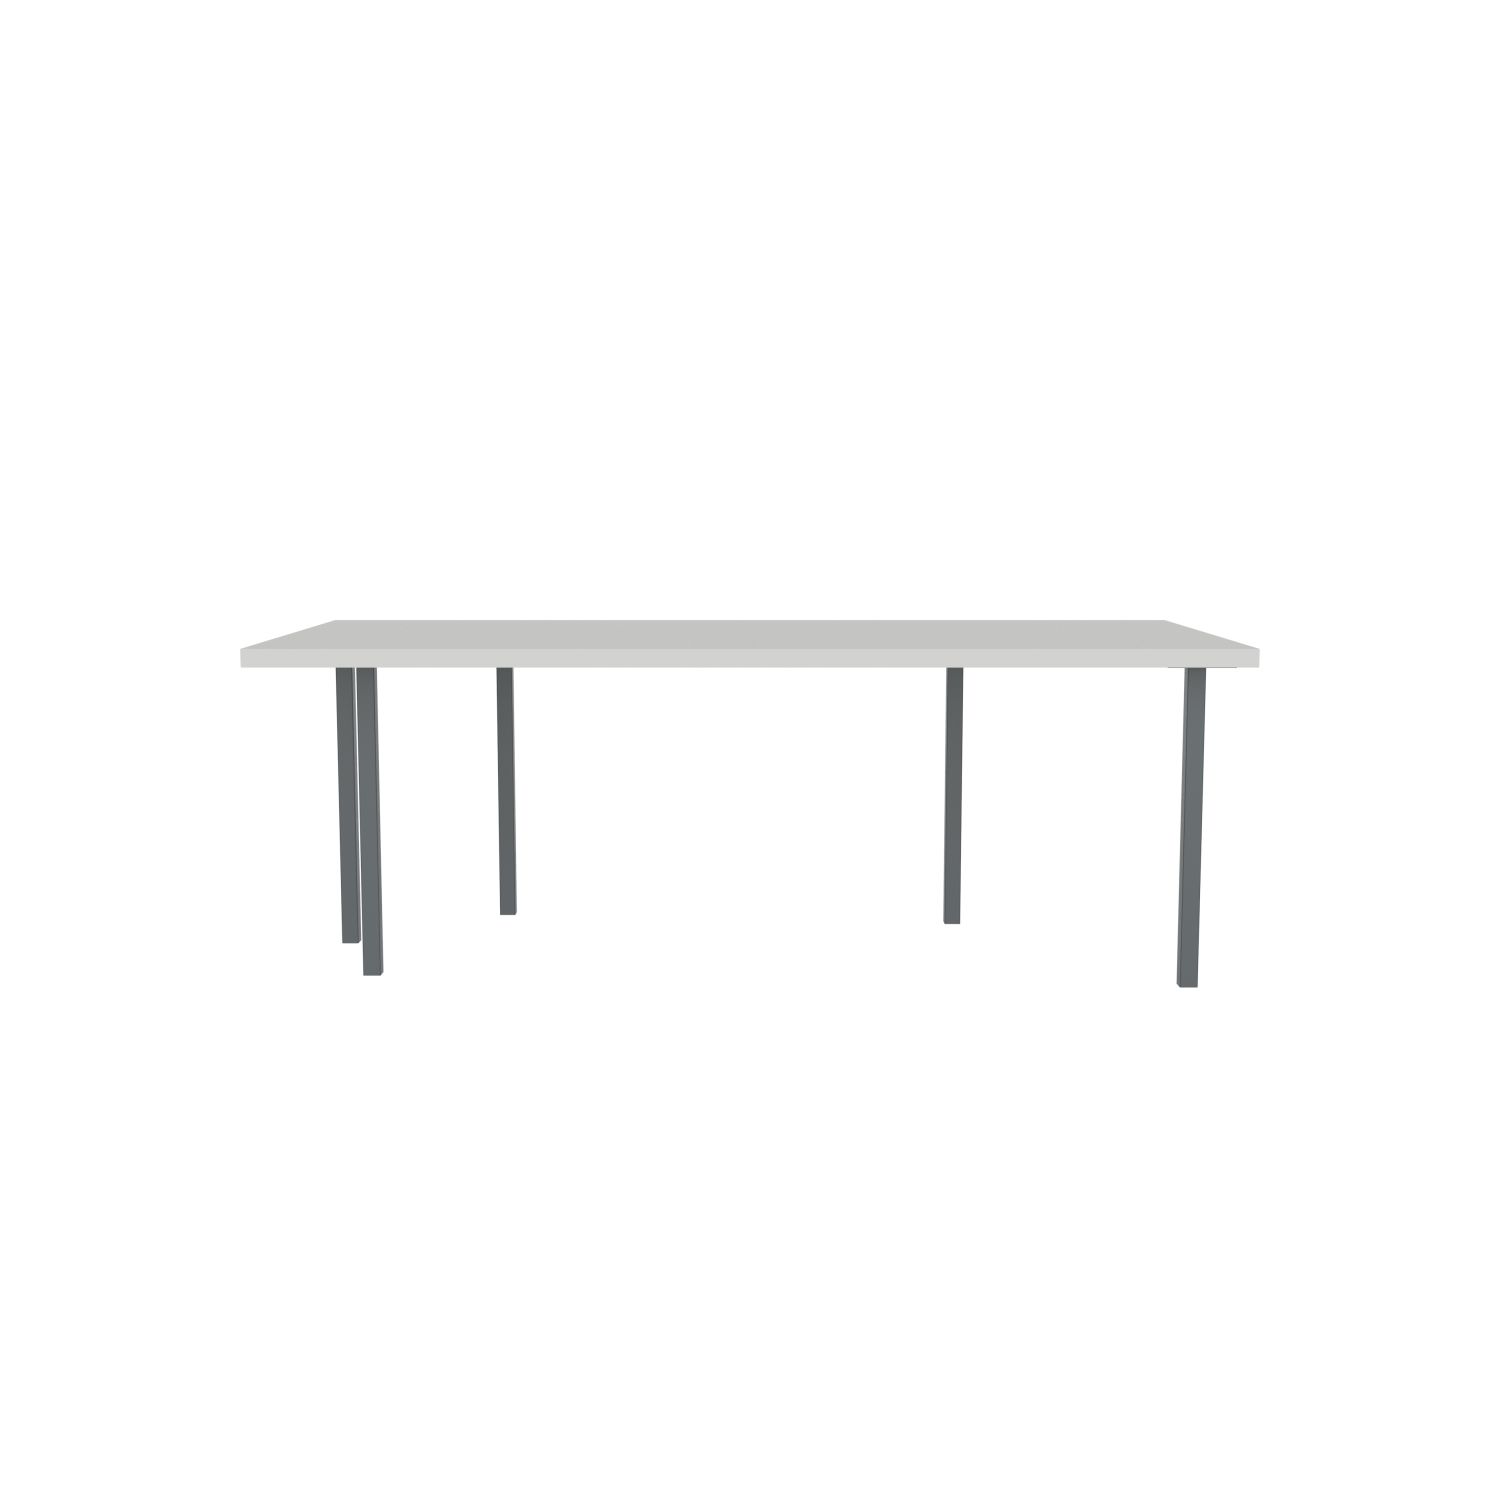 lensvelt bbrand table five fixed heigt 103x218 hpl boring grey 50 mm price level 1 dark grey ral7011